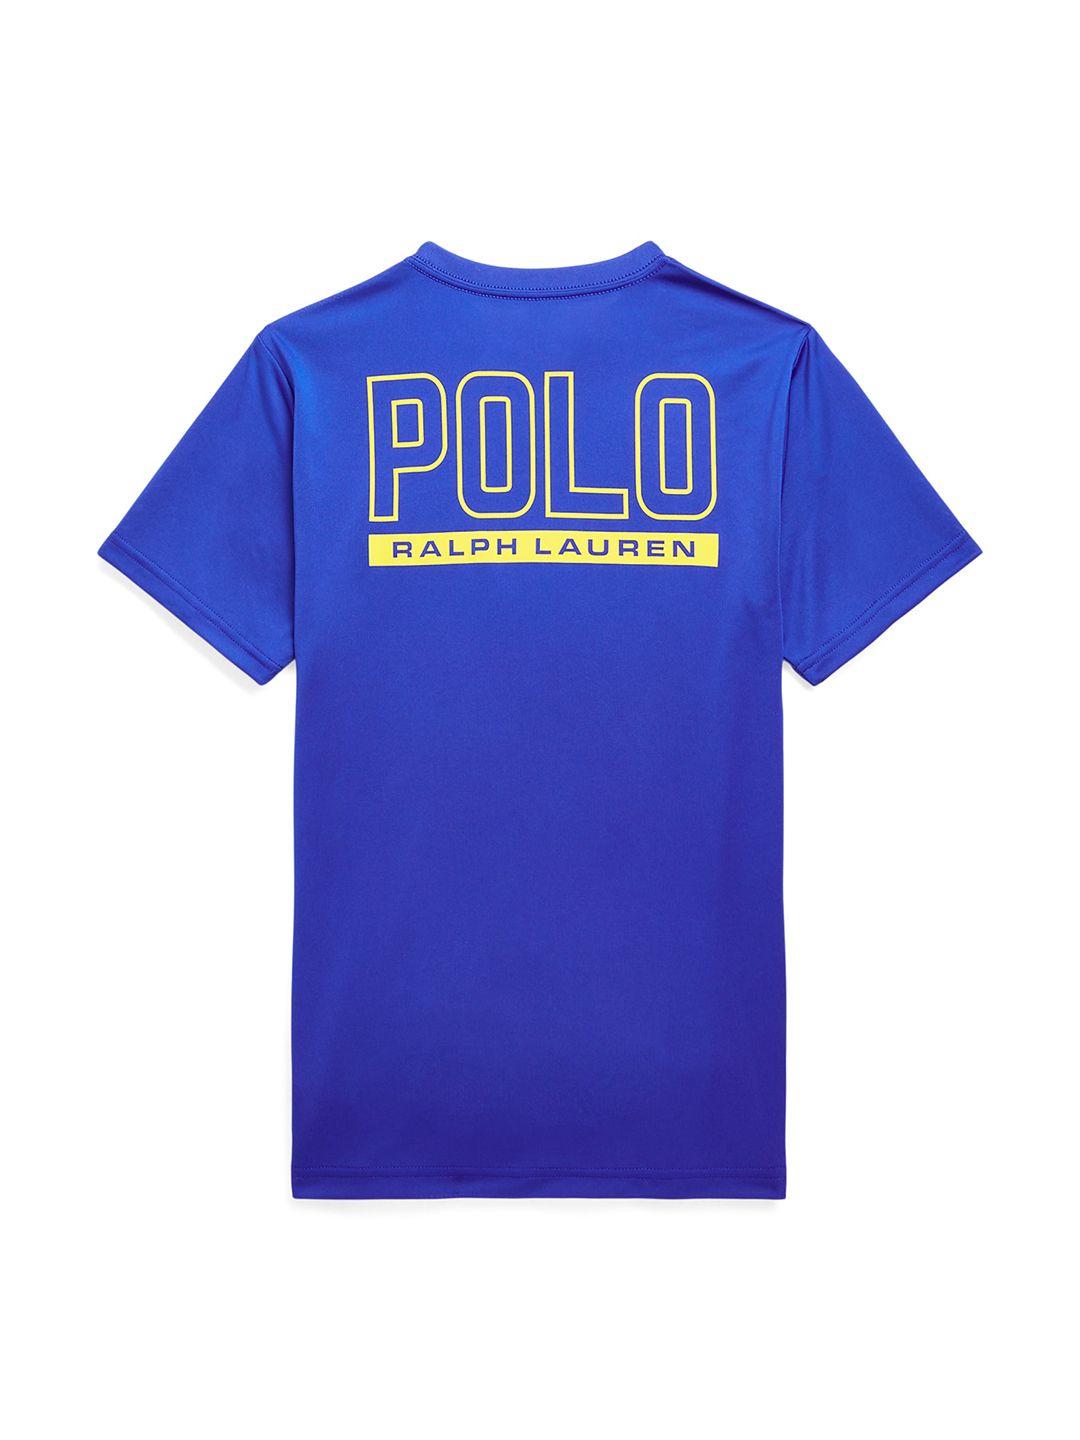 polo ralph lauren typography printed t-shirt